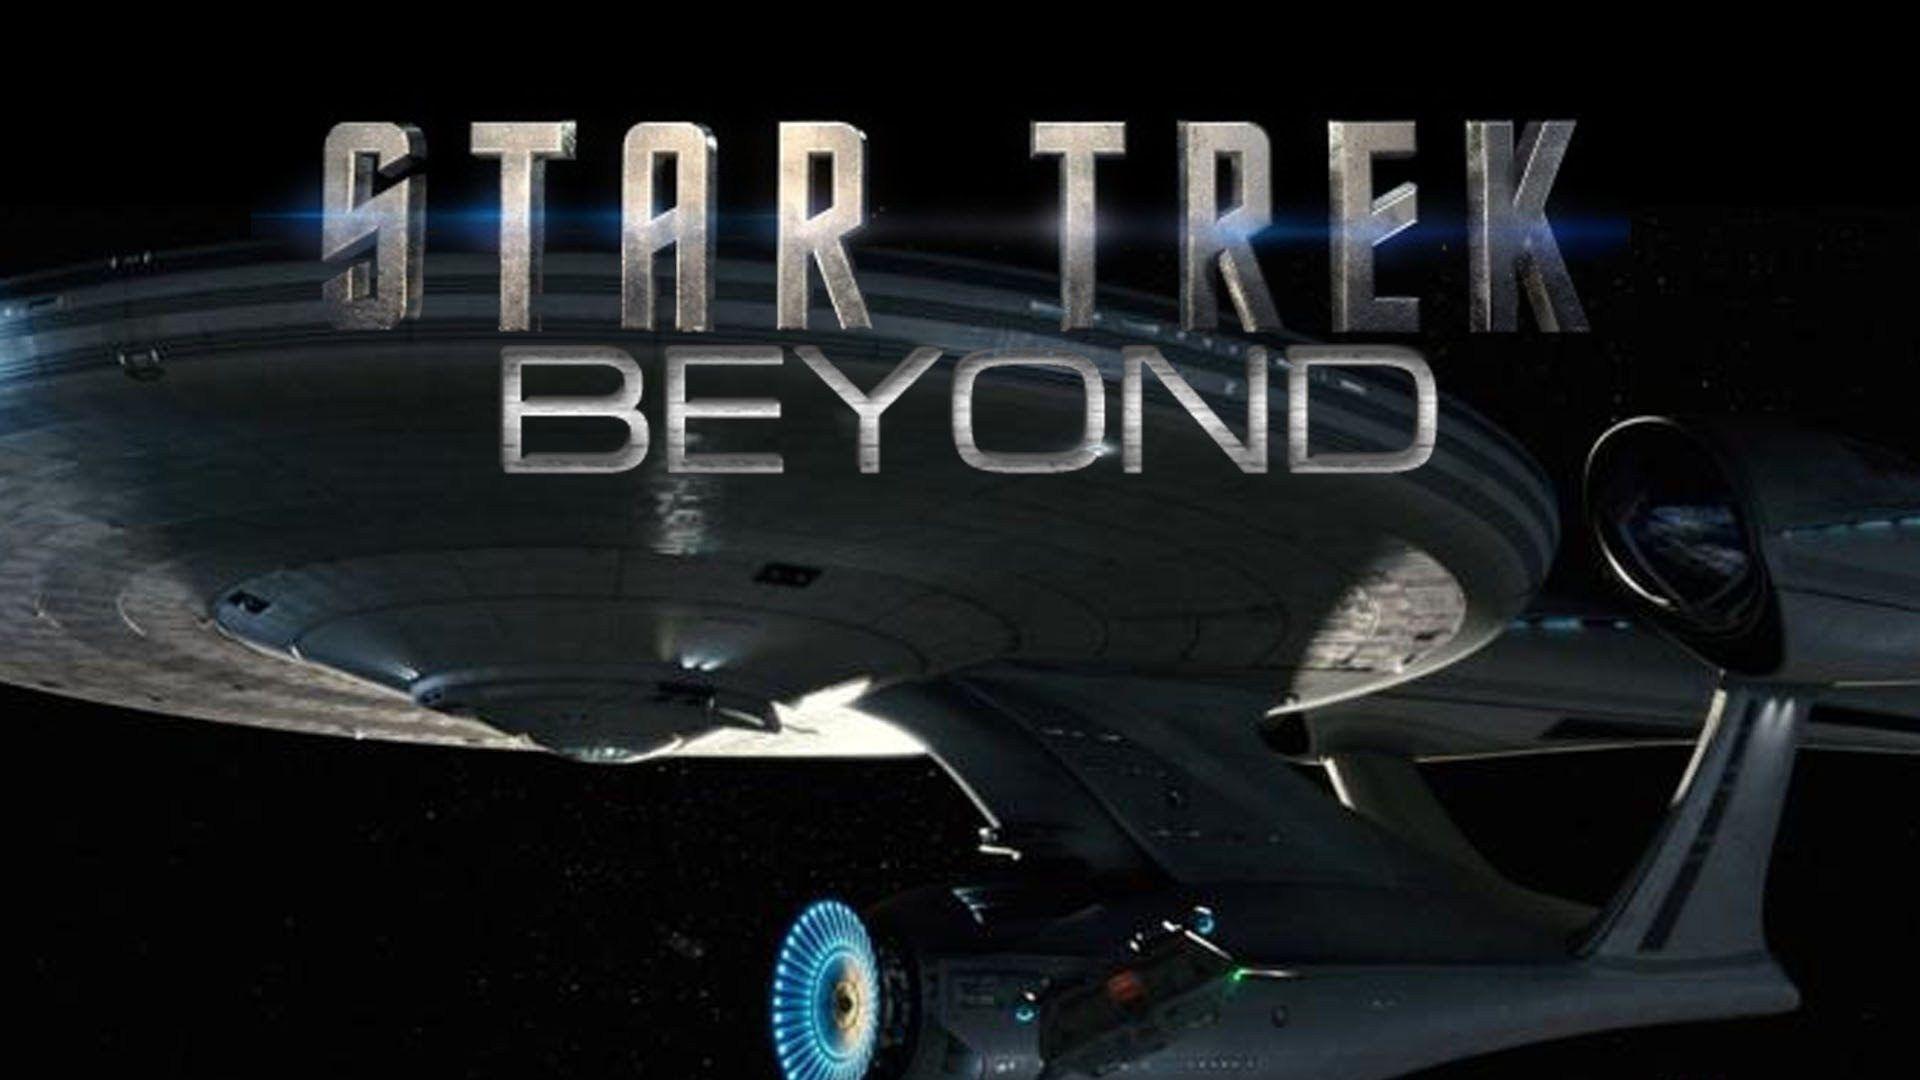 Star Trek Beyond Movies Image Photo Picture Background